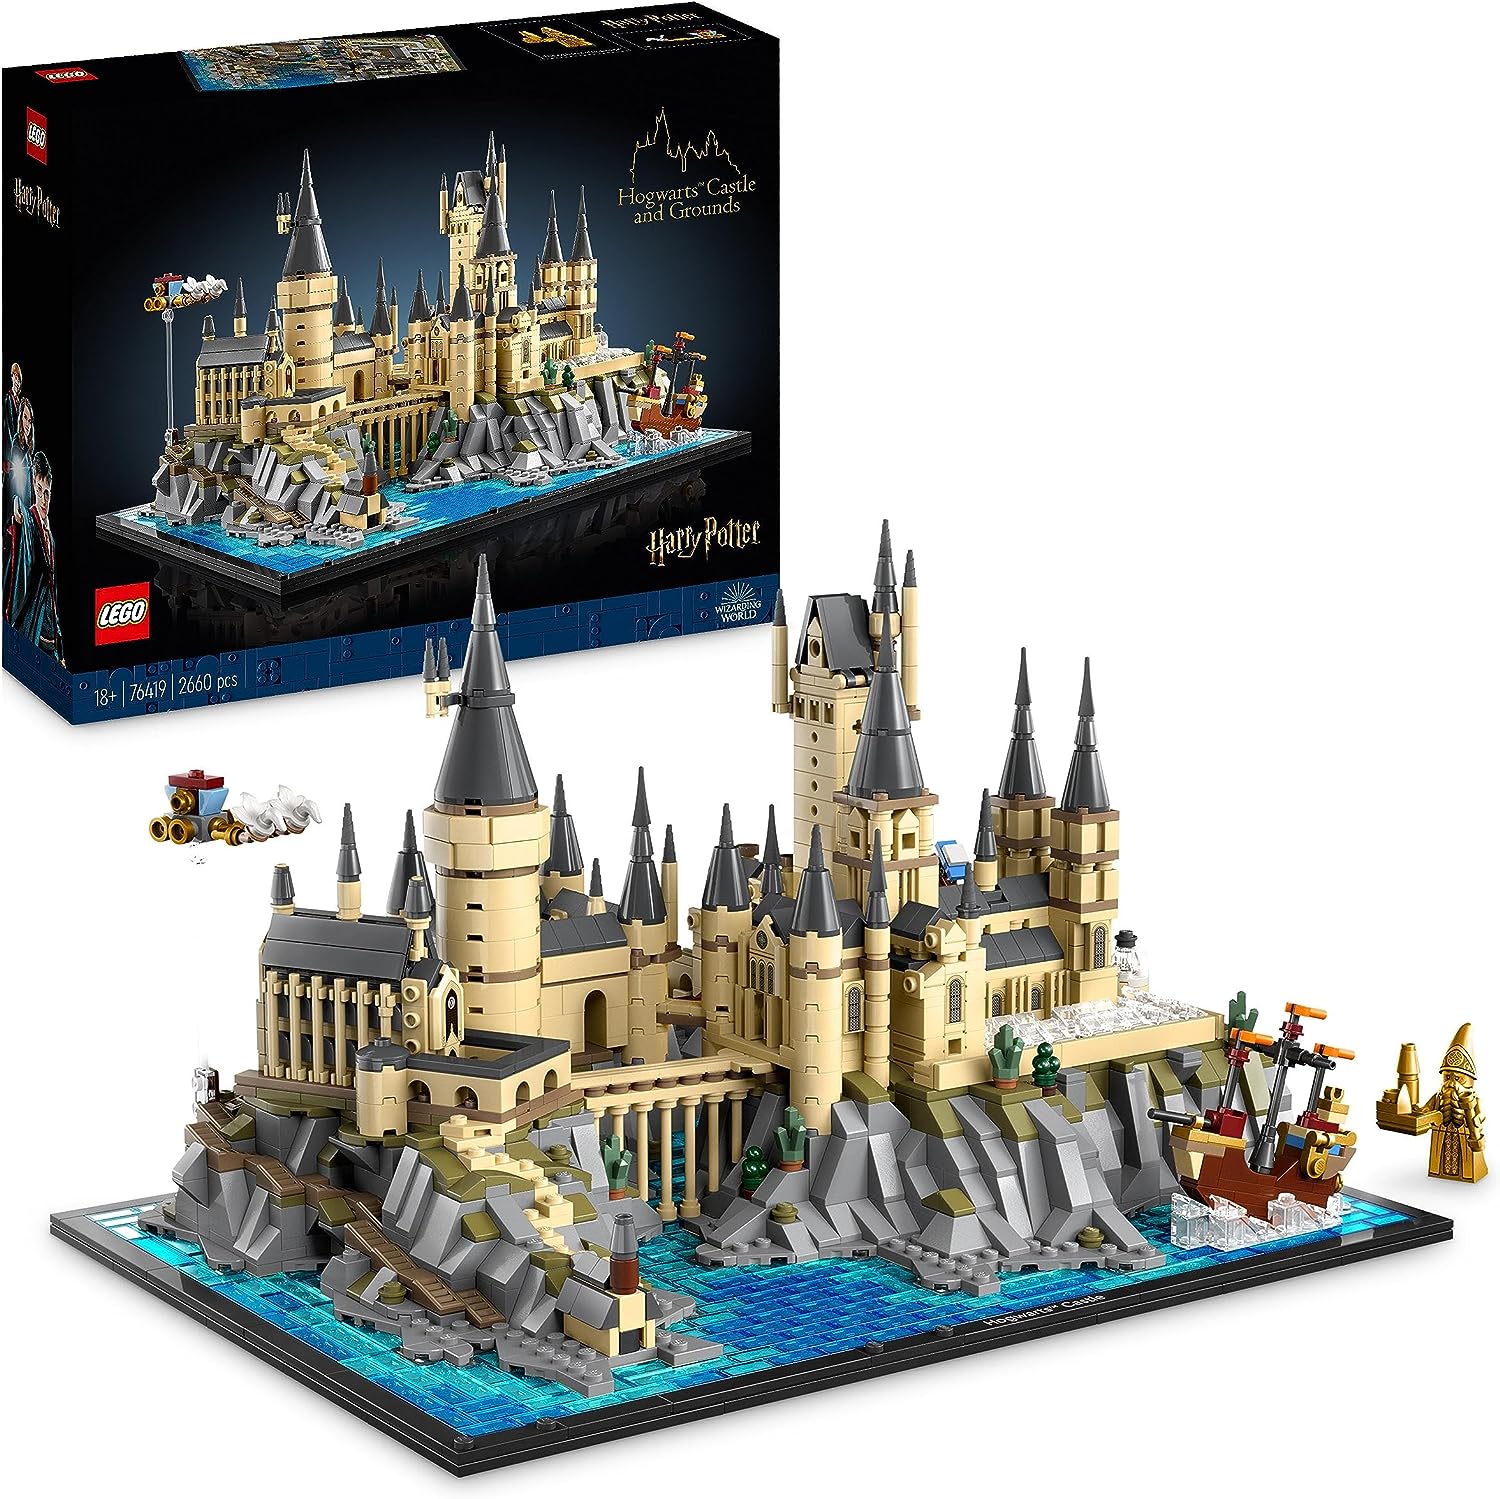 LEGO Harry Potter Hogwarts Castle & Grounds kostet 149,99 £